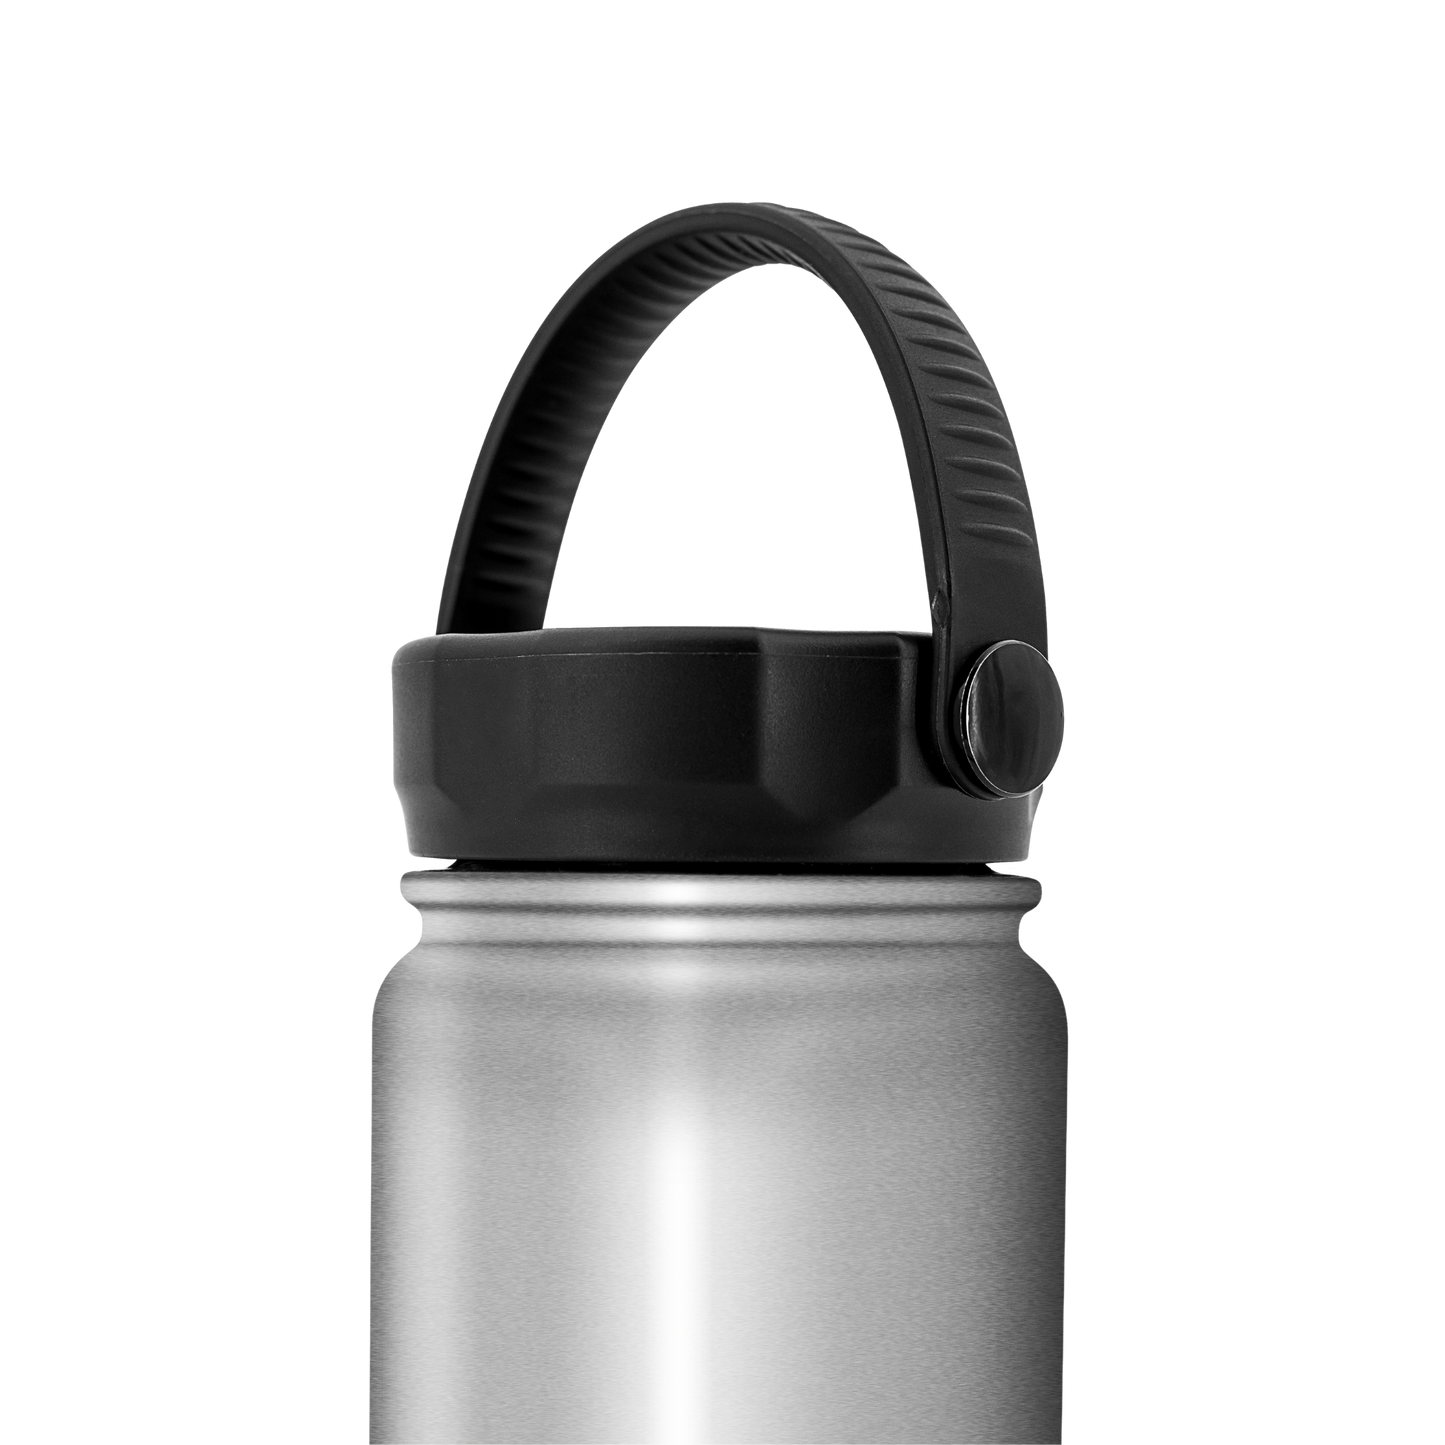 750mL Insulated Water Bottle - Banish